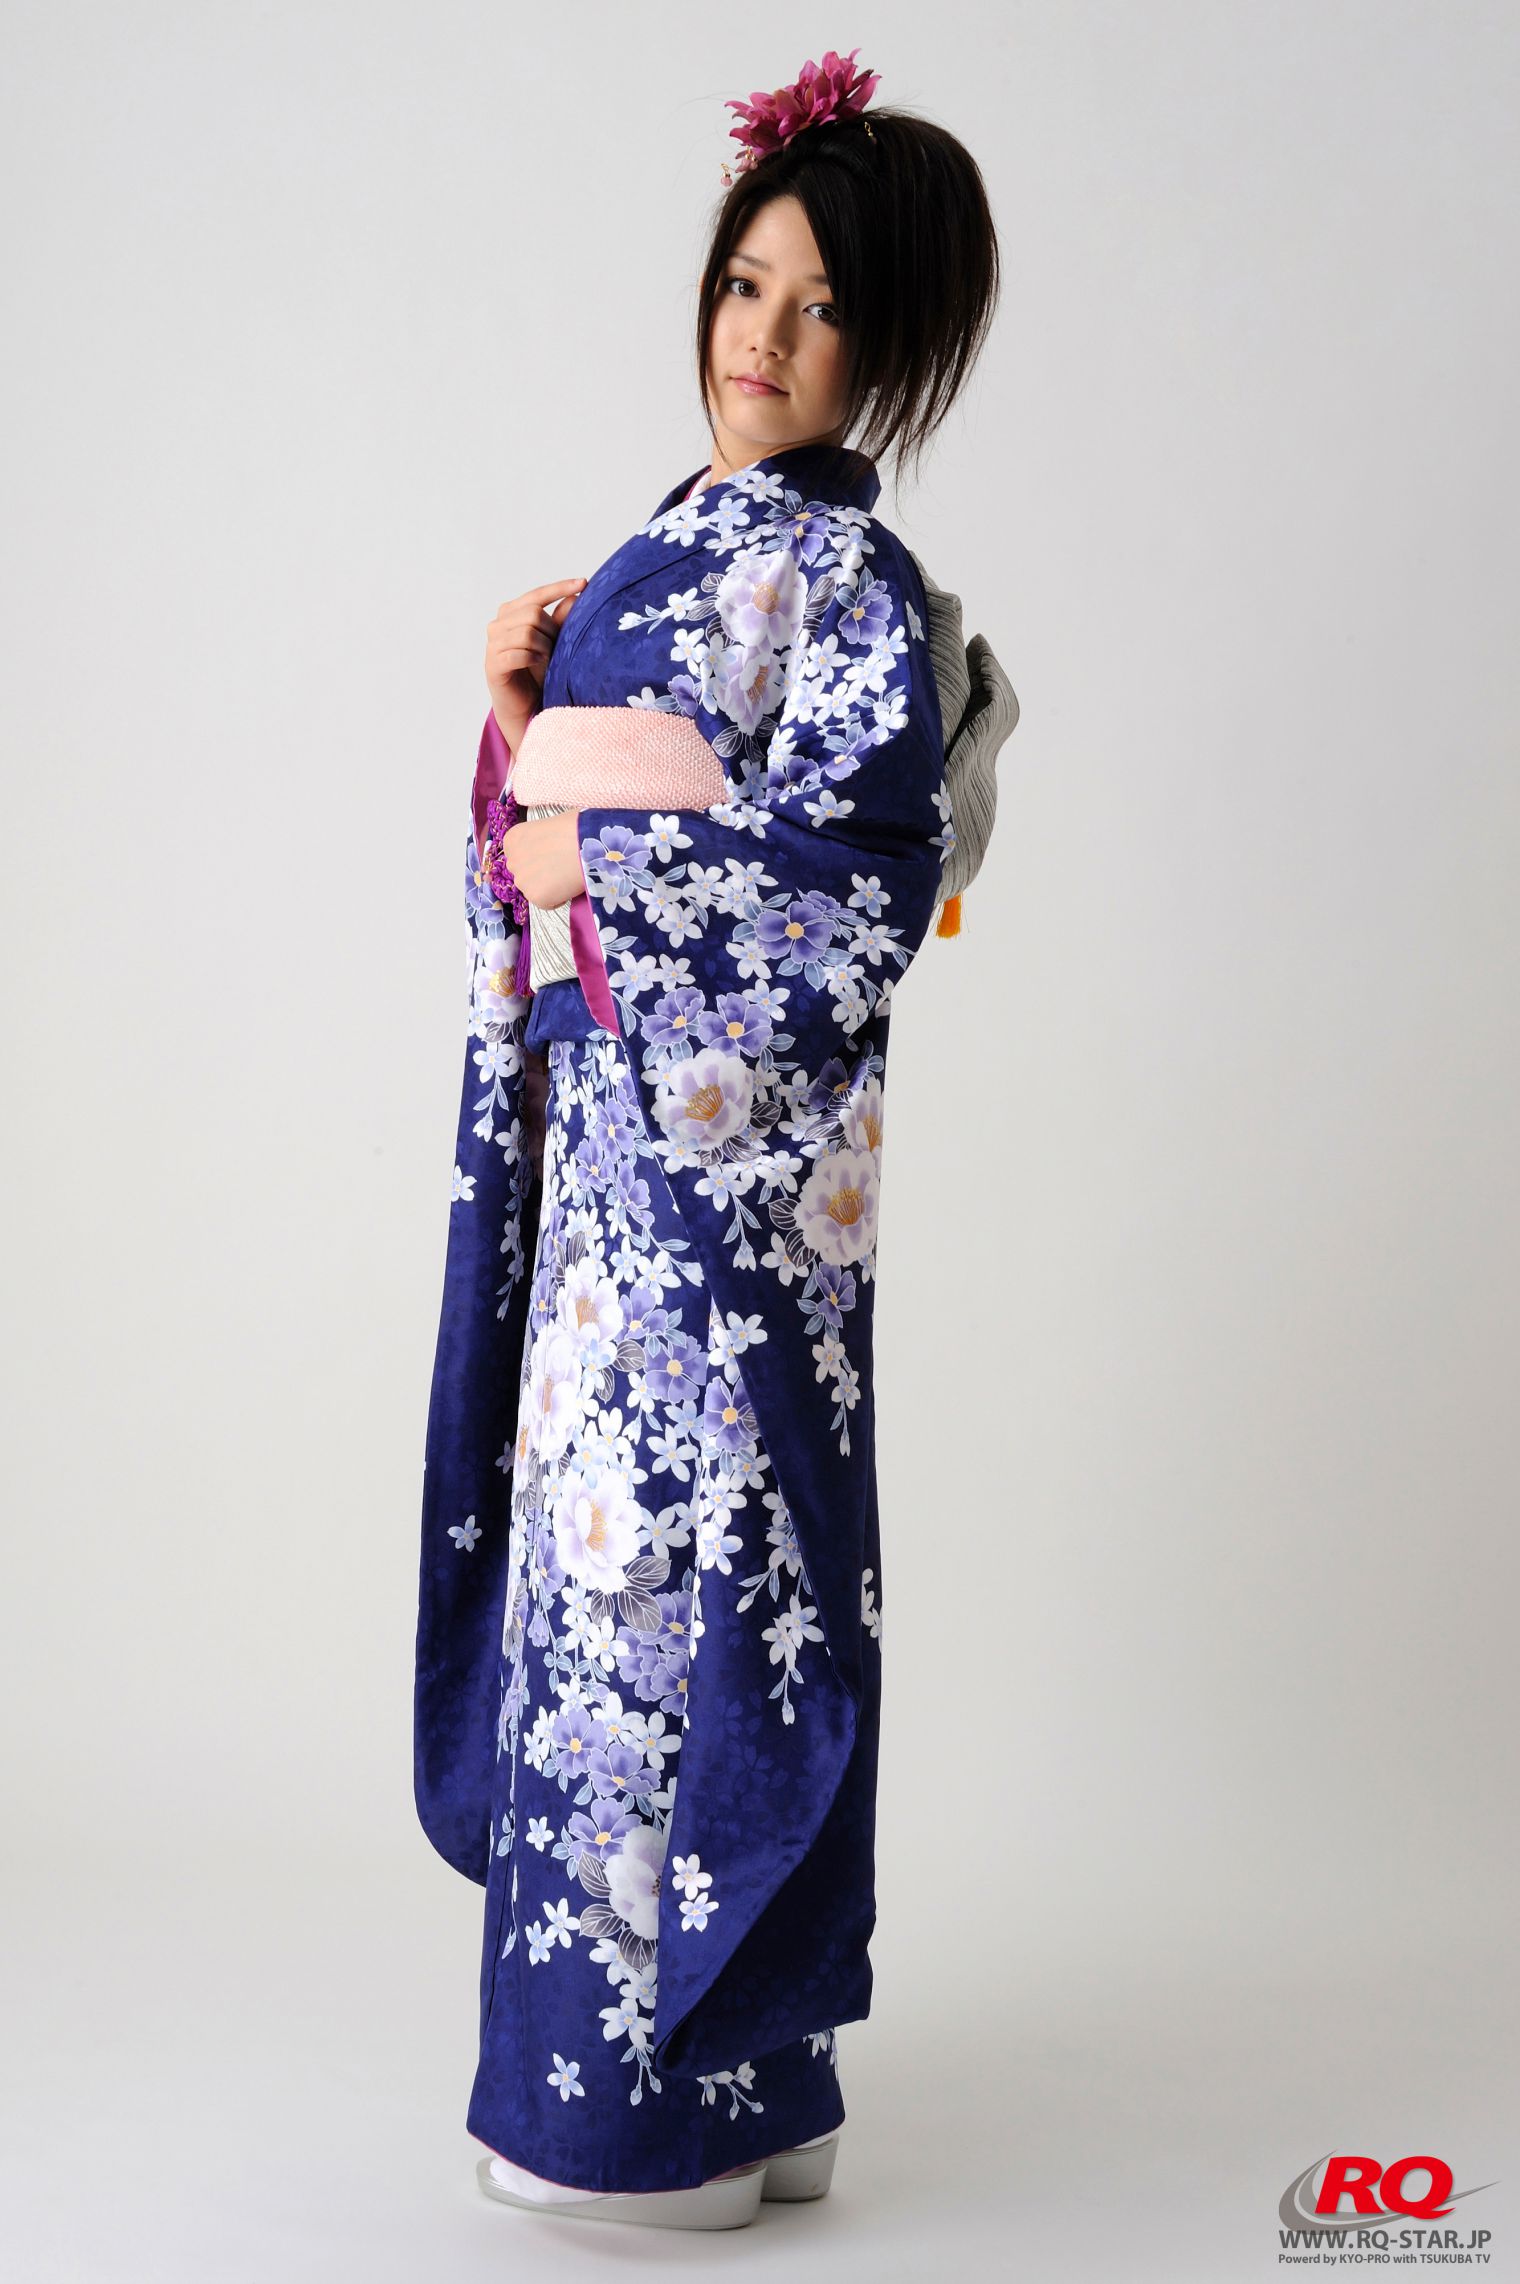 [RQ-STAR] NO.00068 古崎瞳 謹賀新年 Kimono – Happy New Year 和服系列73